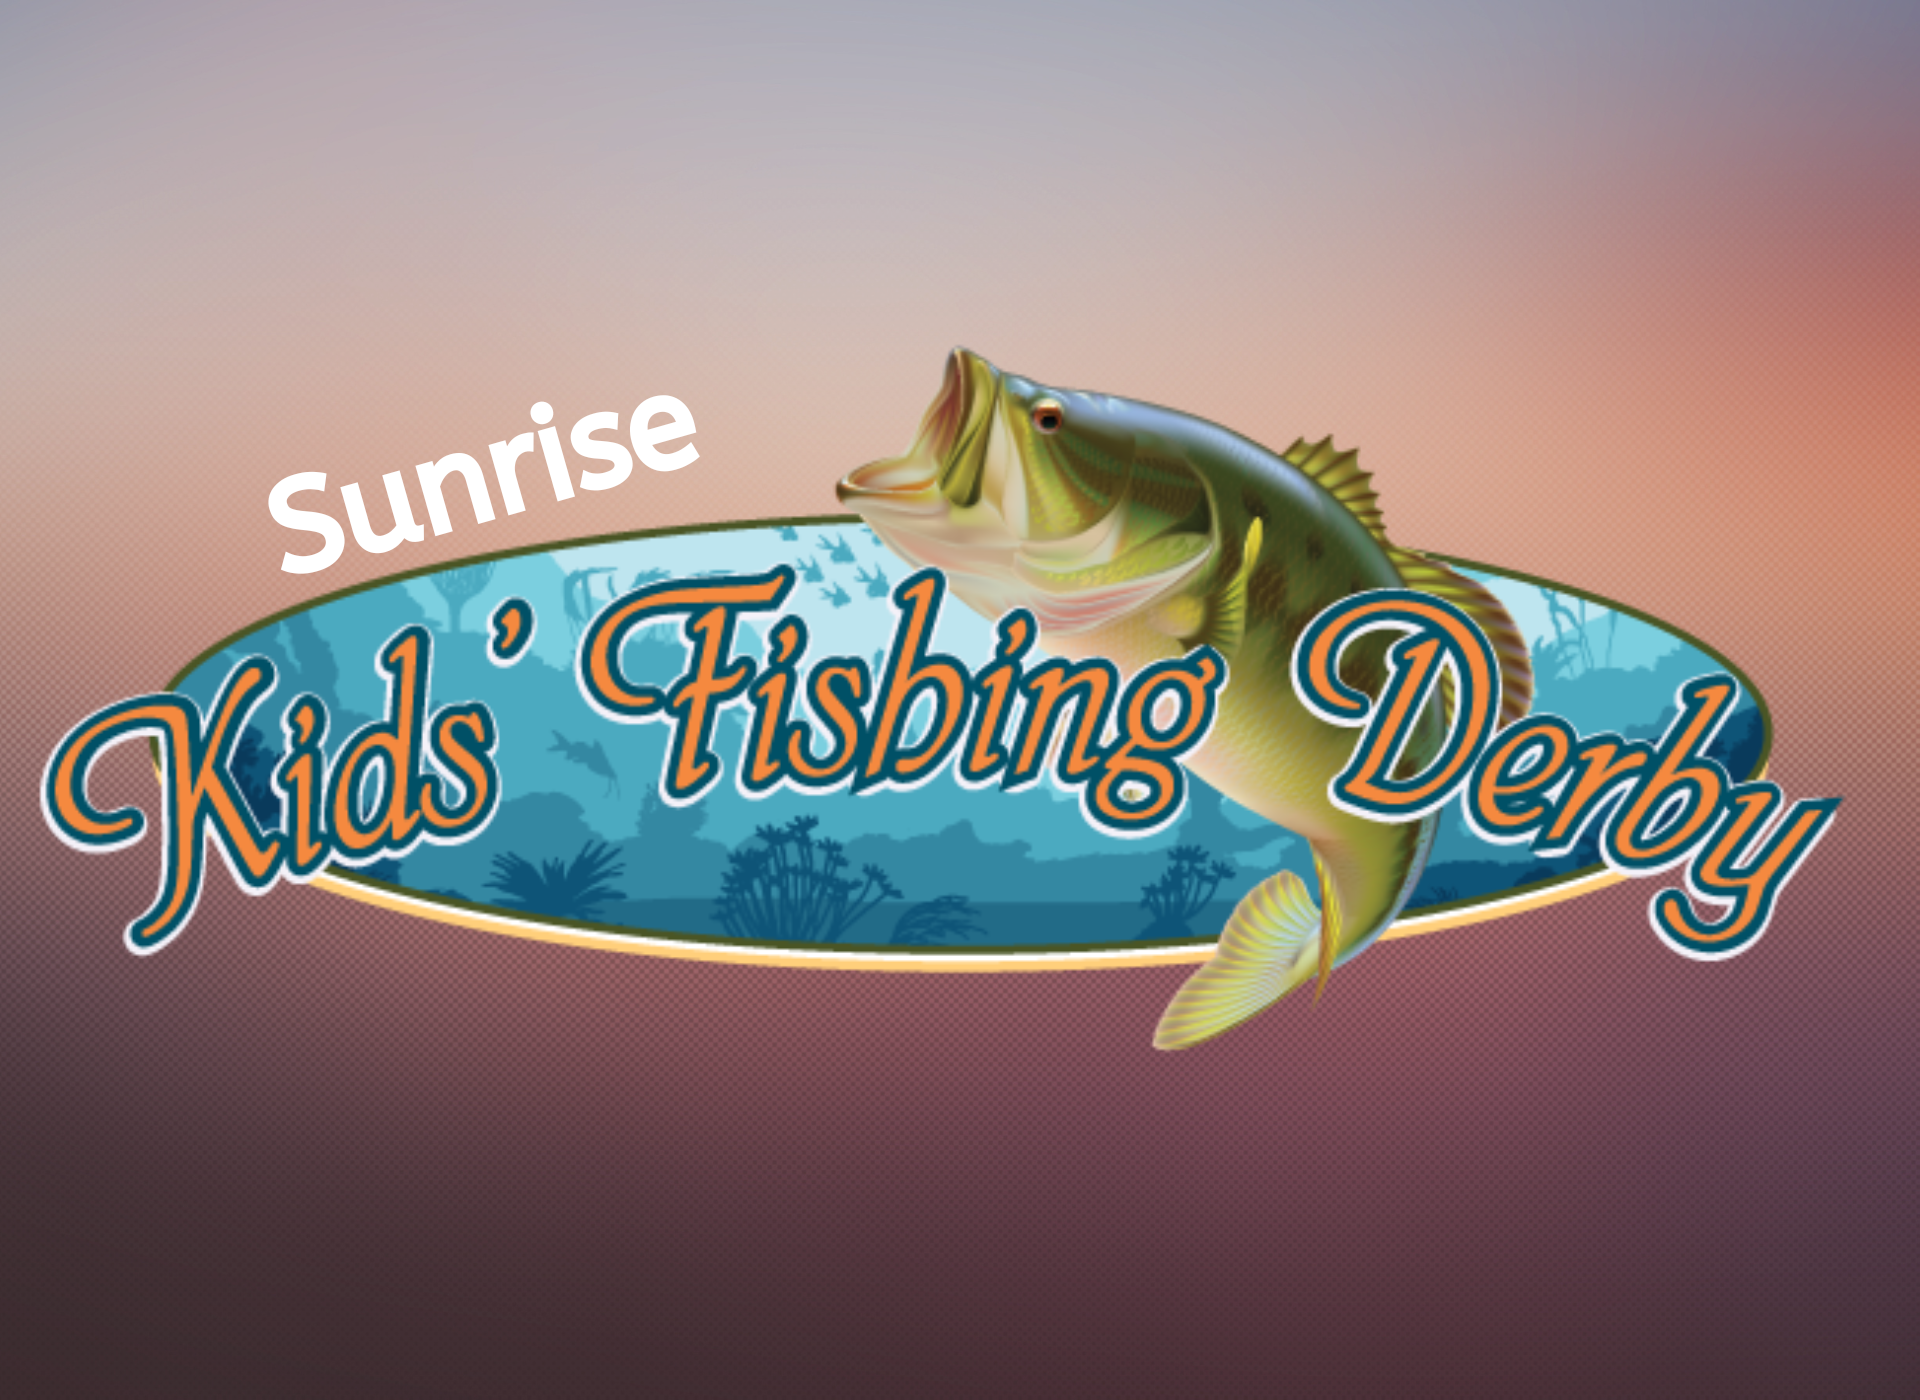 City of Sunrise - Kids Fishing Derby